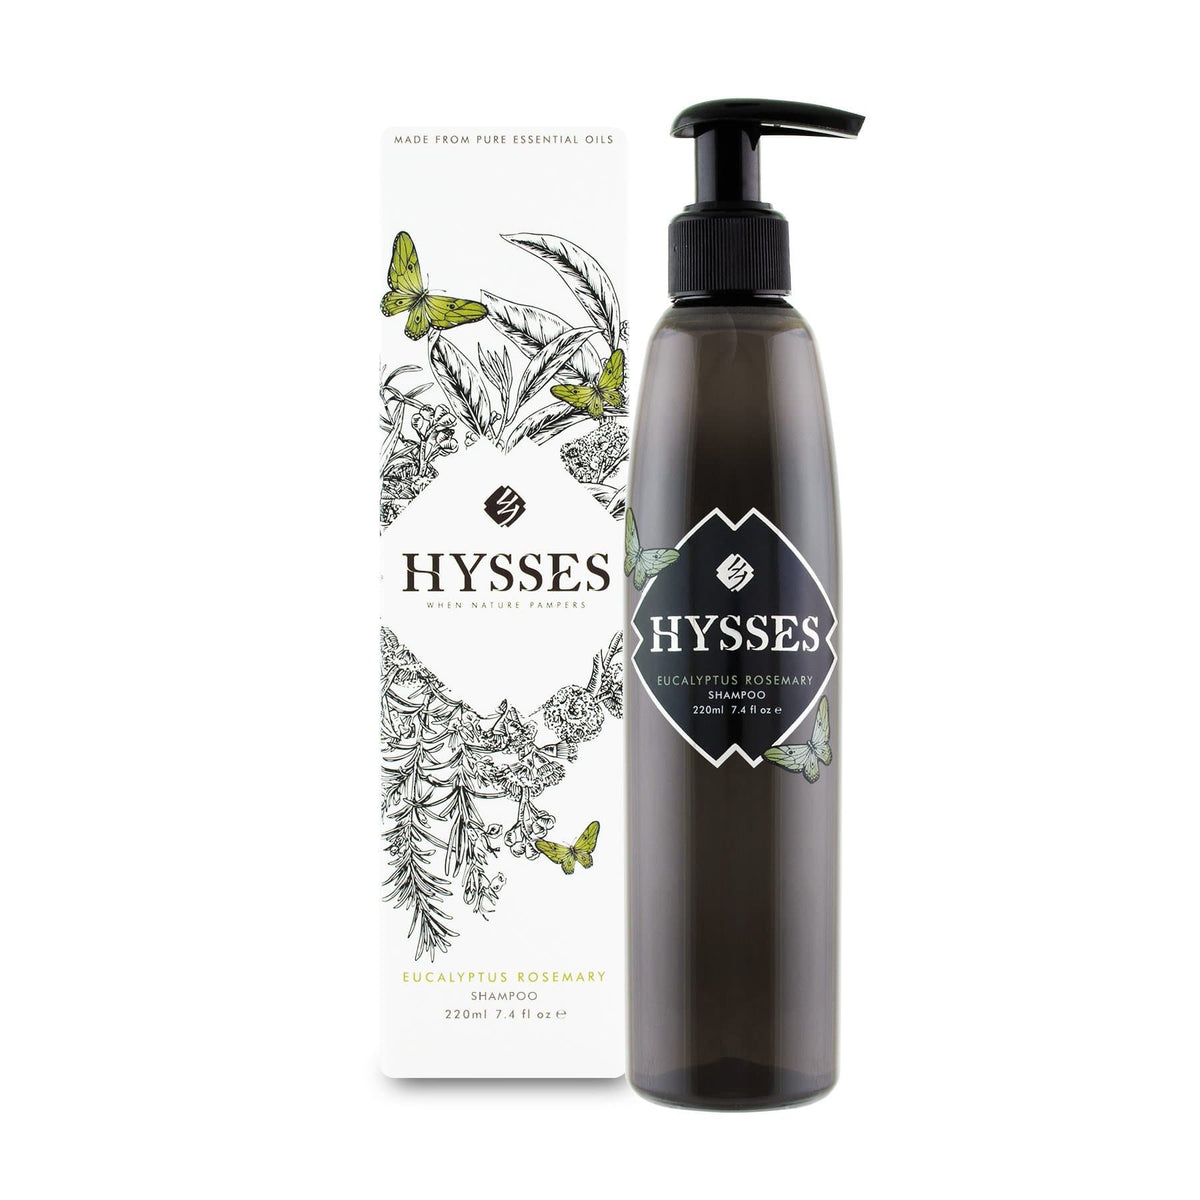 Hysses Hair Care Shampoo Eucalyptus Rosemary, 220ml